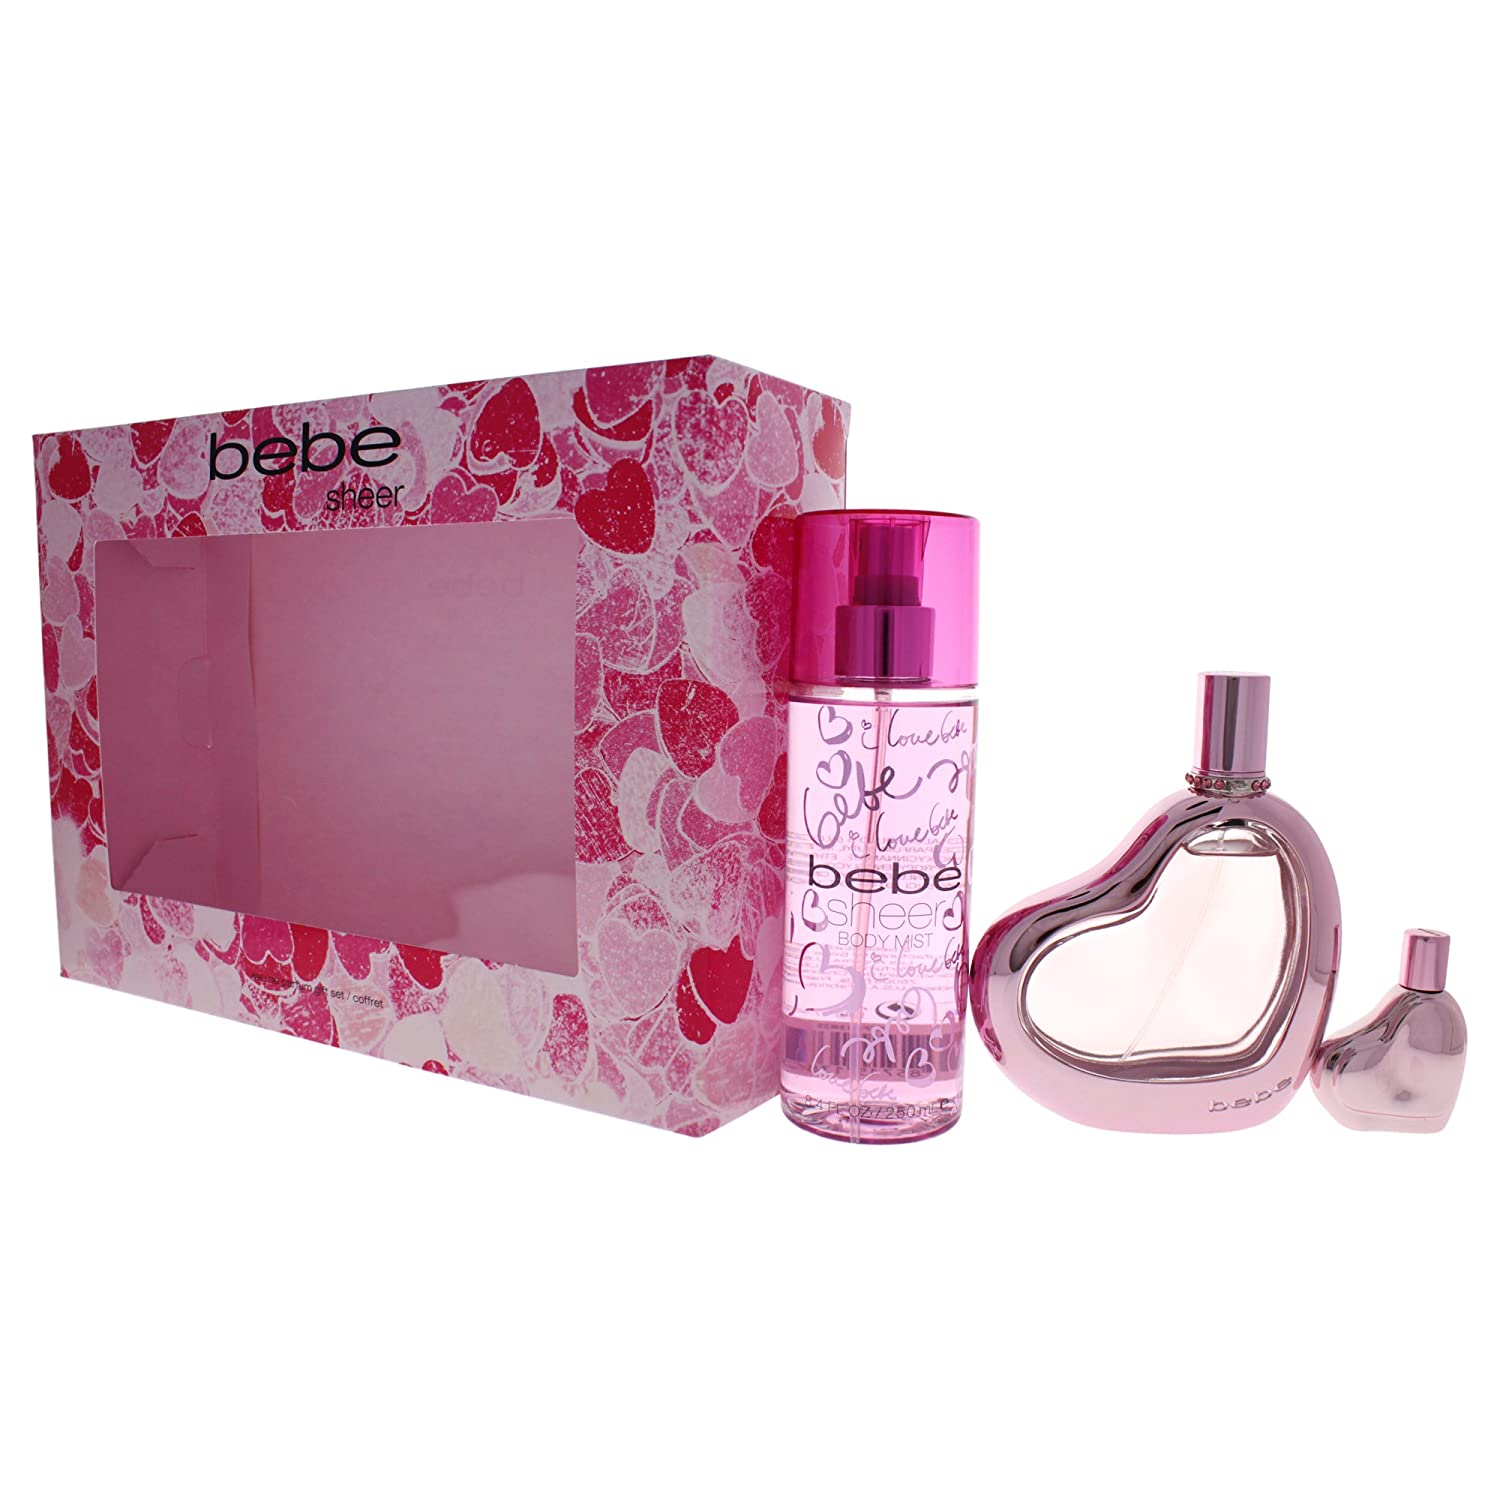 BEBE - Bebe Sheer para mujer / SET - 100 ml Eau De Parfum Spray + 250 ml Body Mist + 10 ml mini EDP